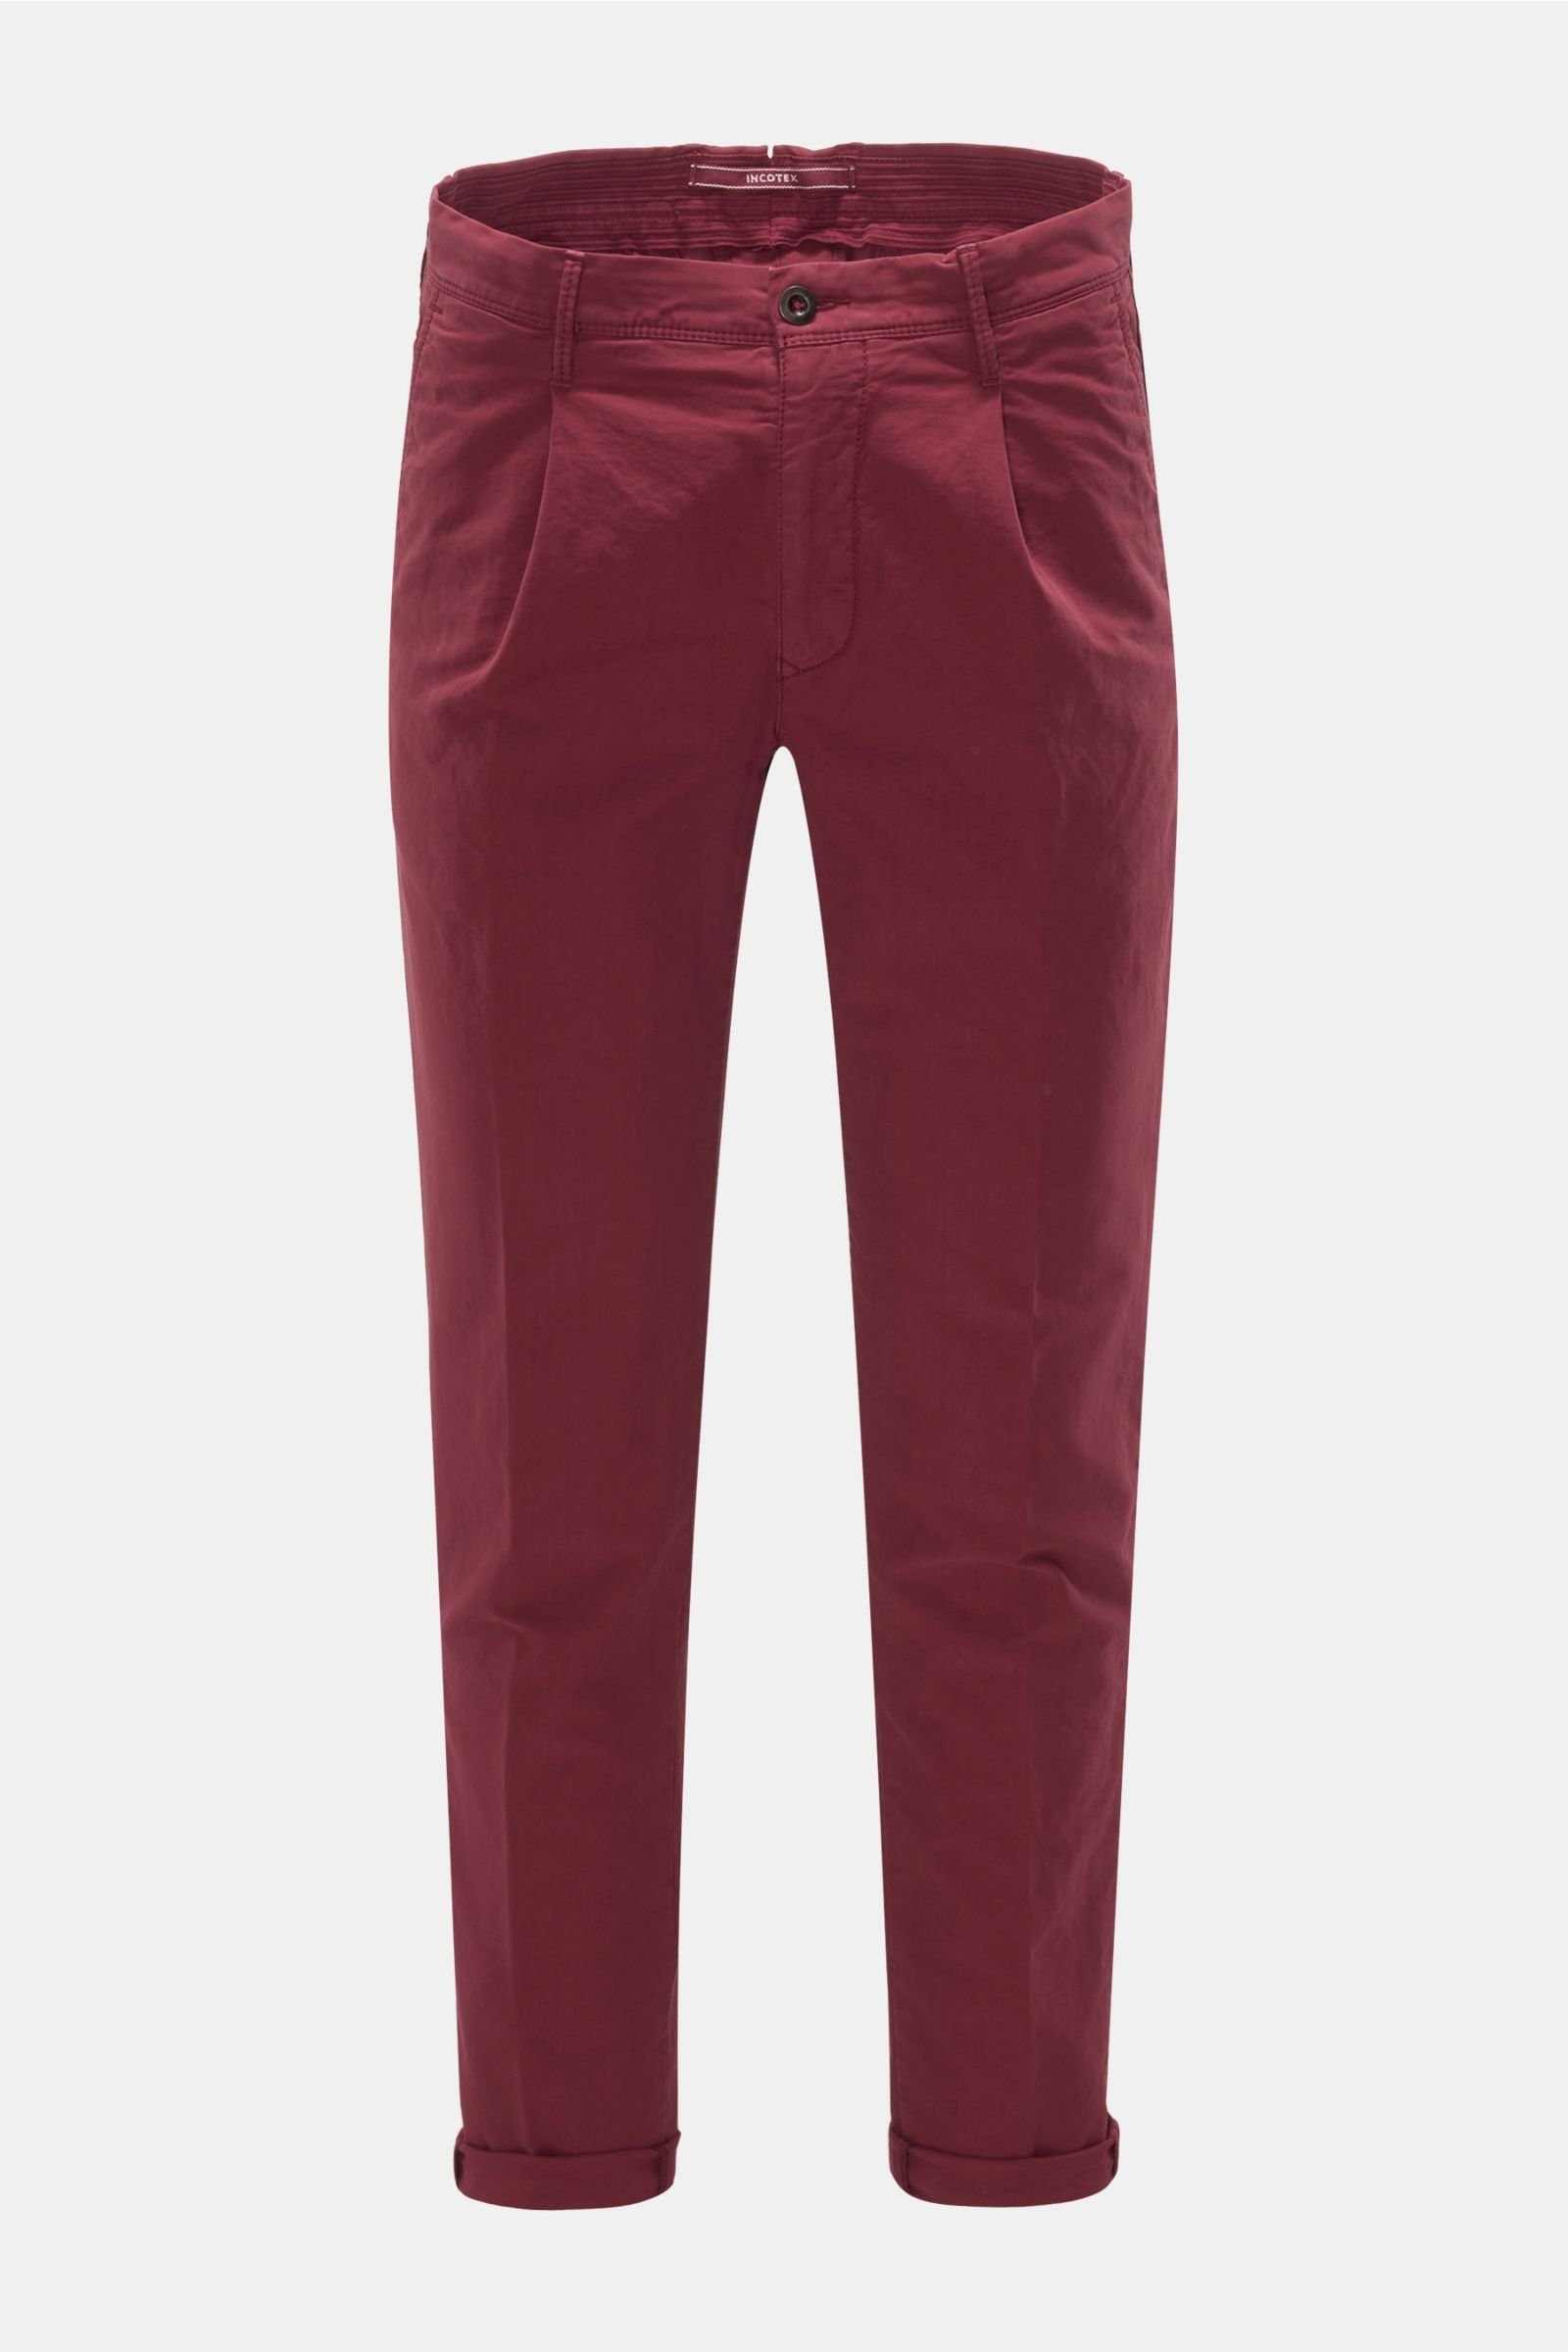 Cotton trousers 'Slacks' dark red